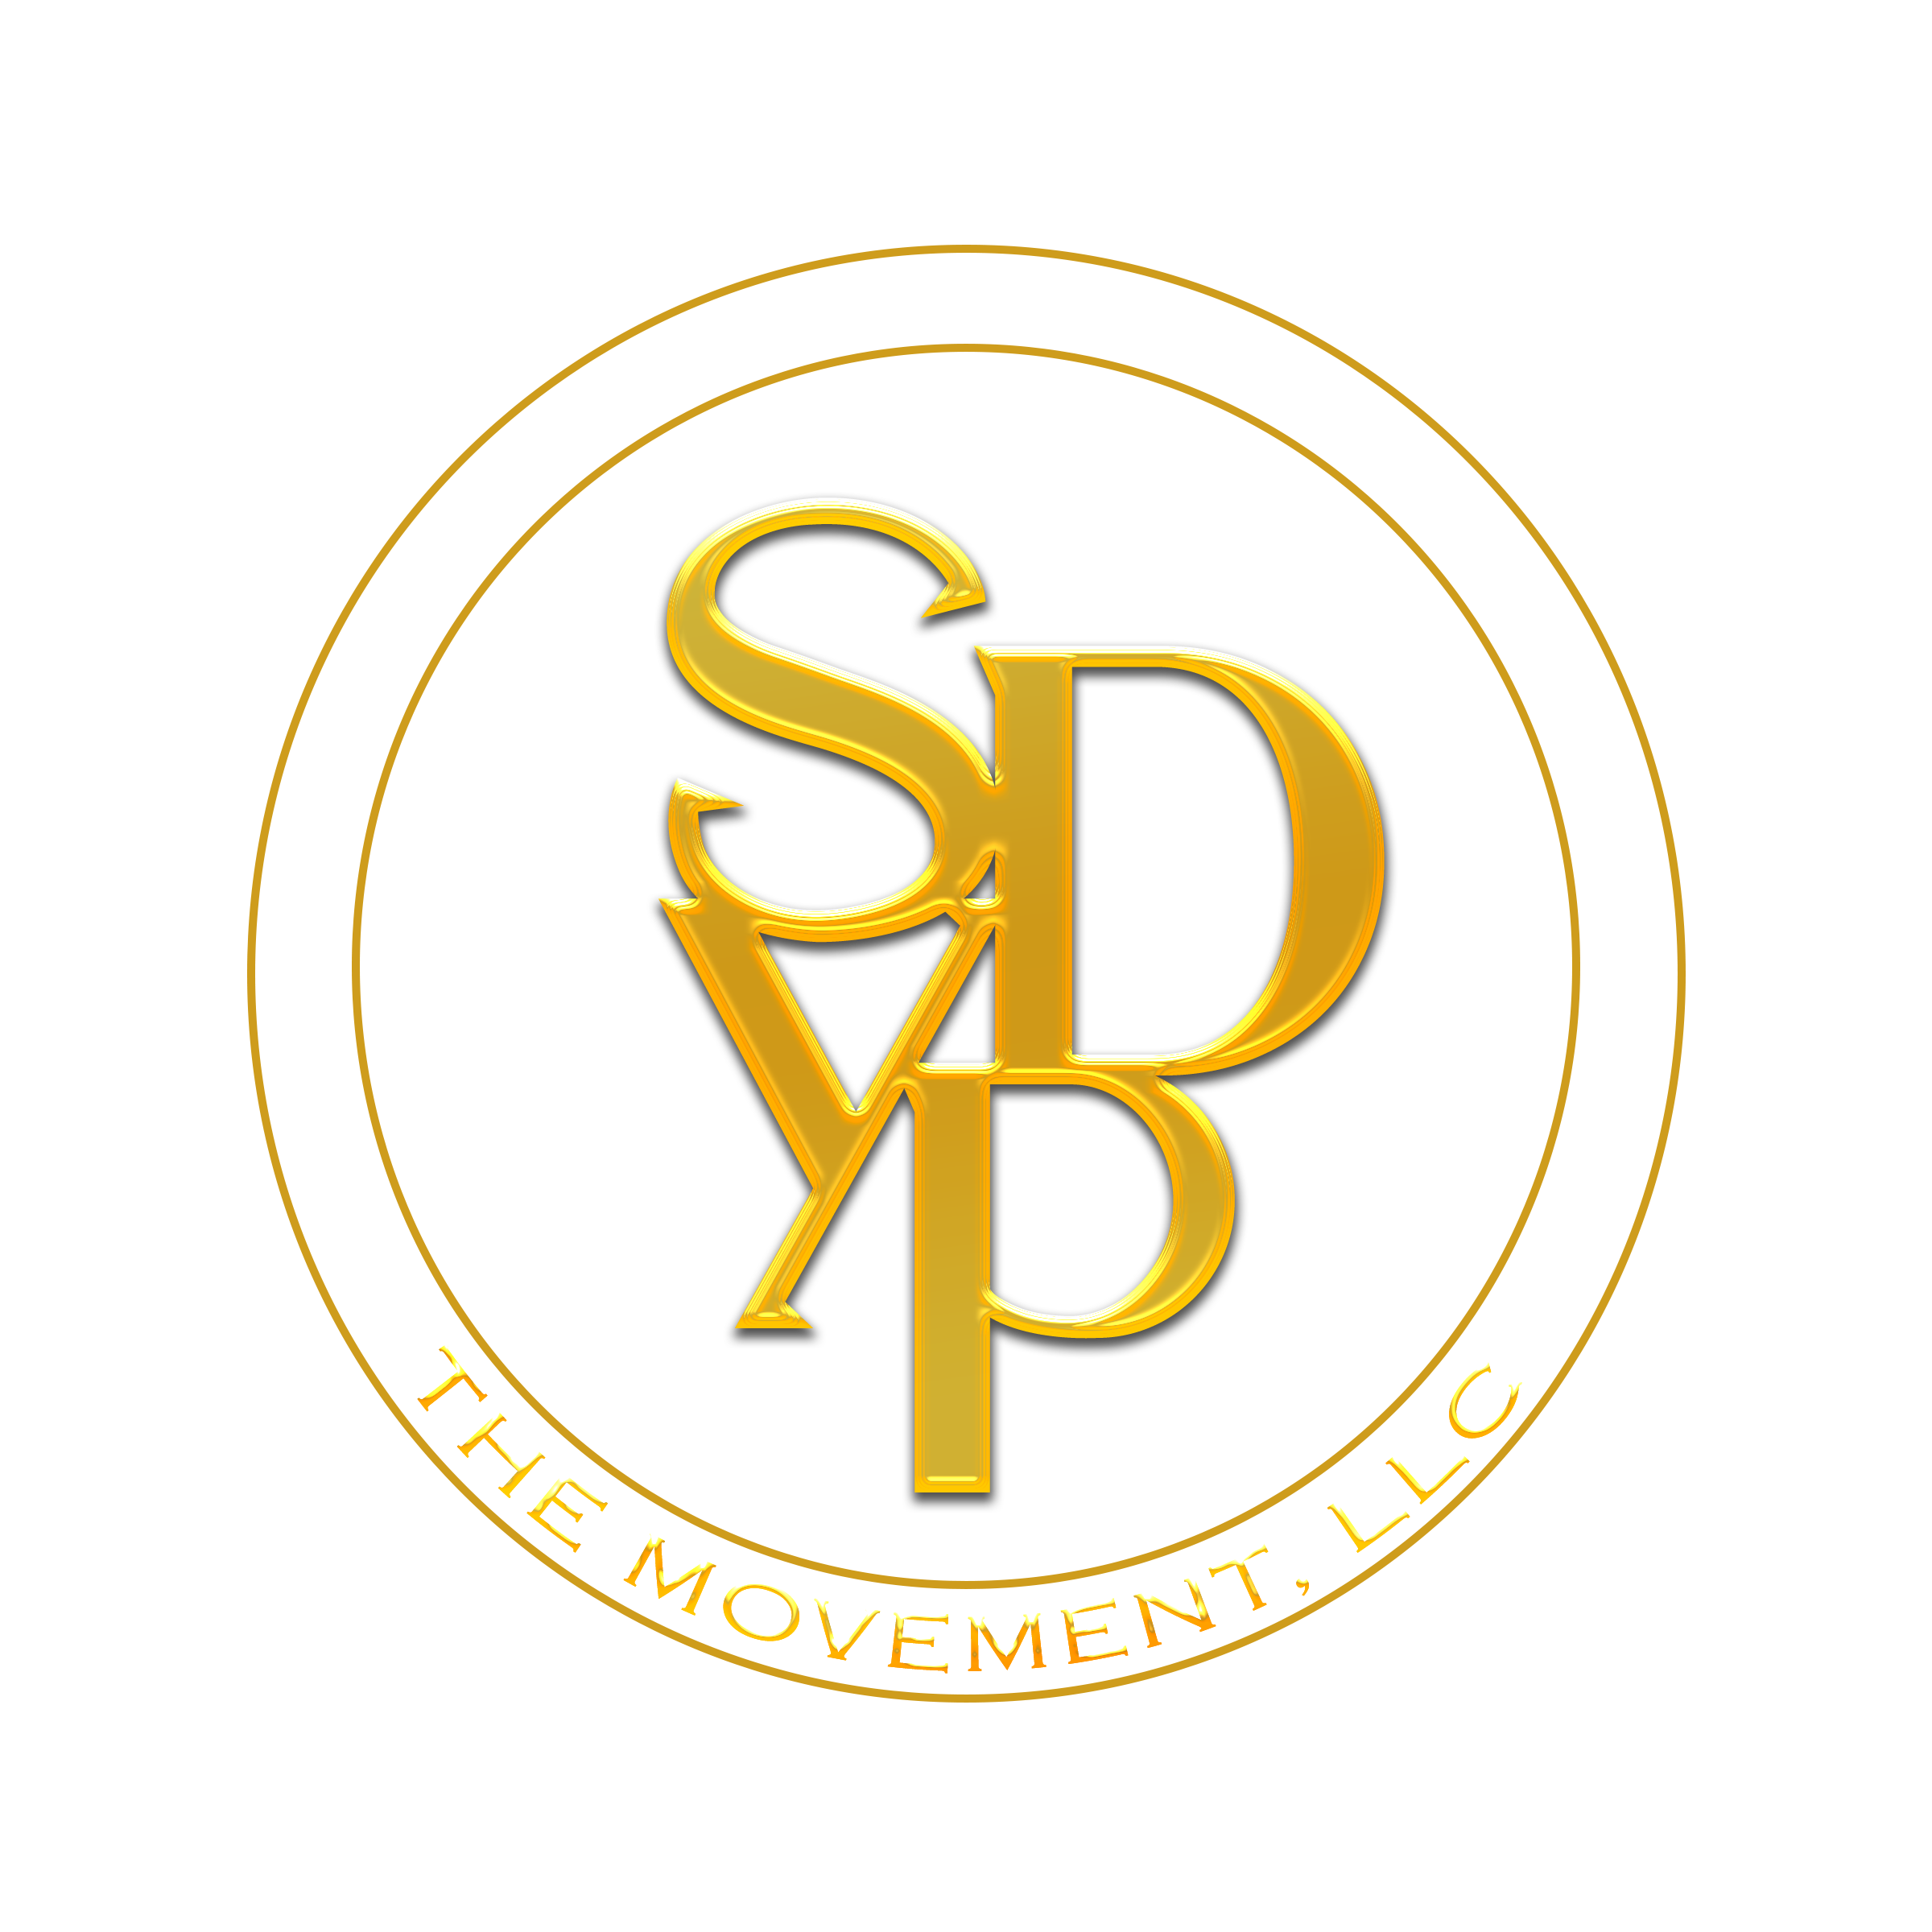 S.D.Y.P The Movement